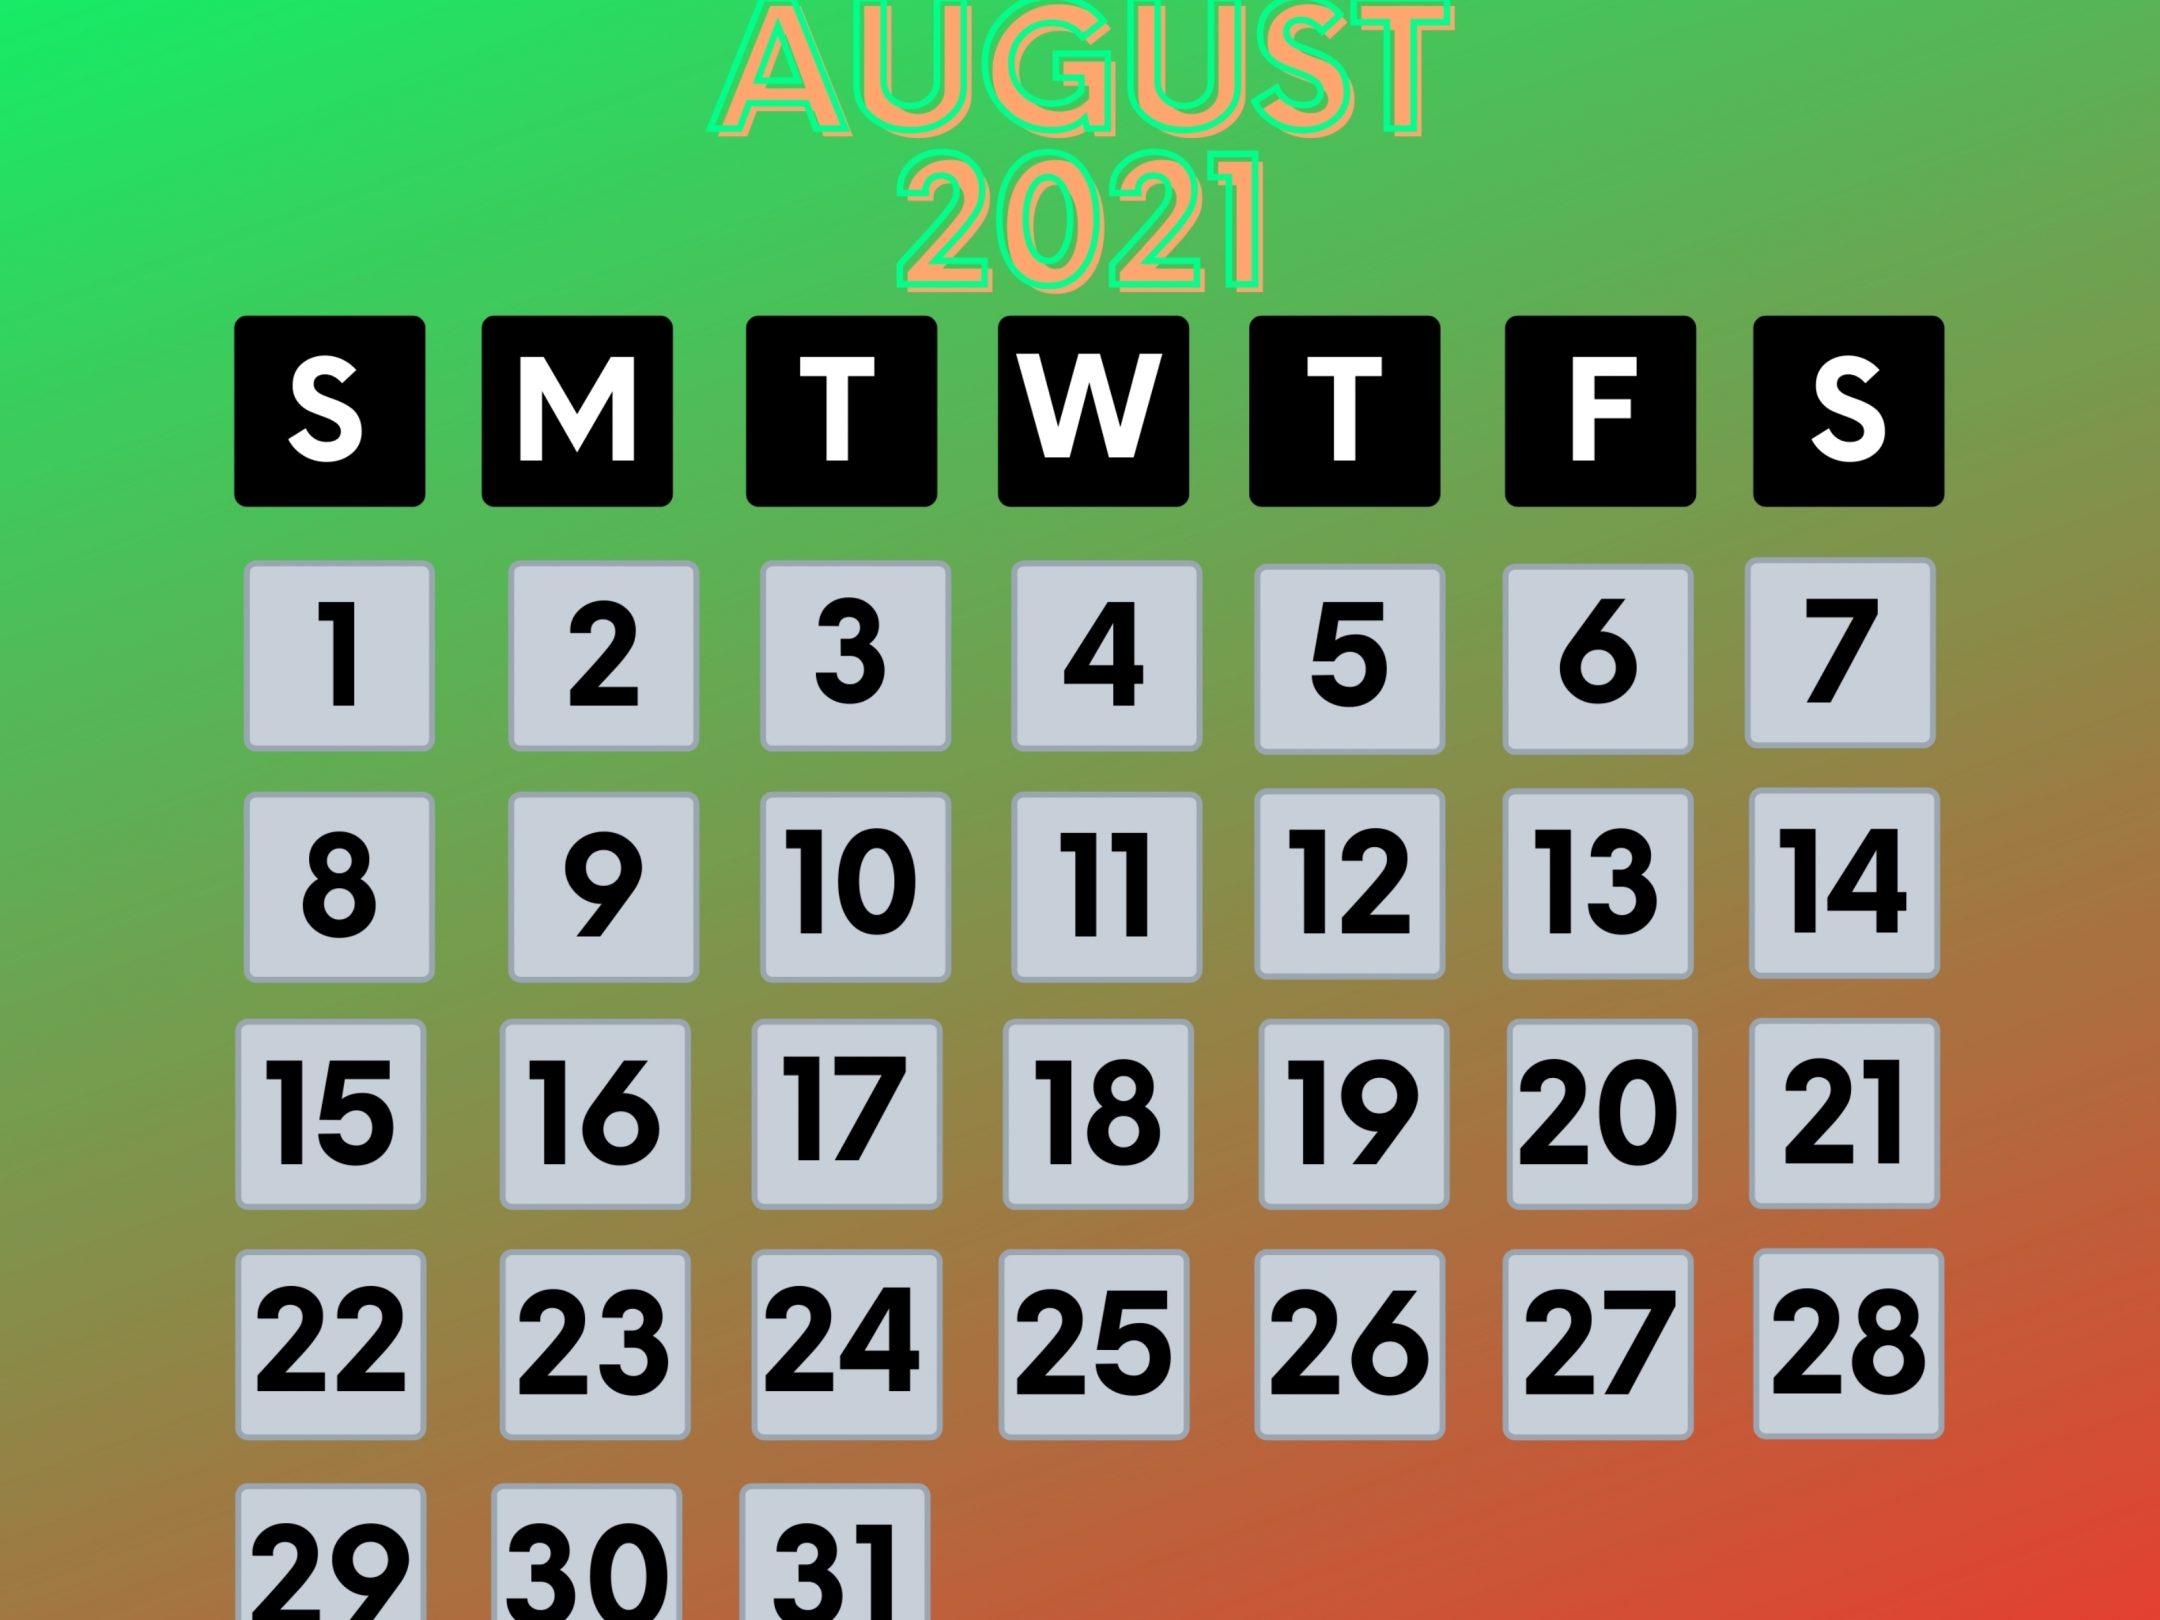 2160x1620 iPad wallpaper 4k August 2021 Calendar iPad Wallpaper 2160x1620 pixels resolution